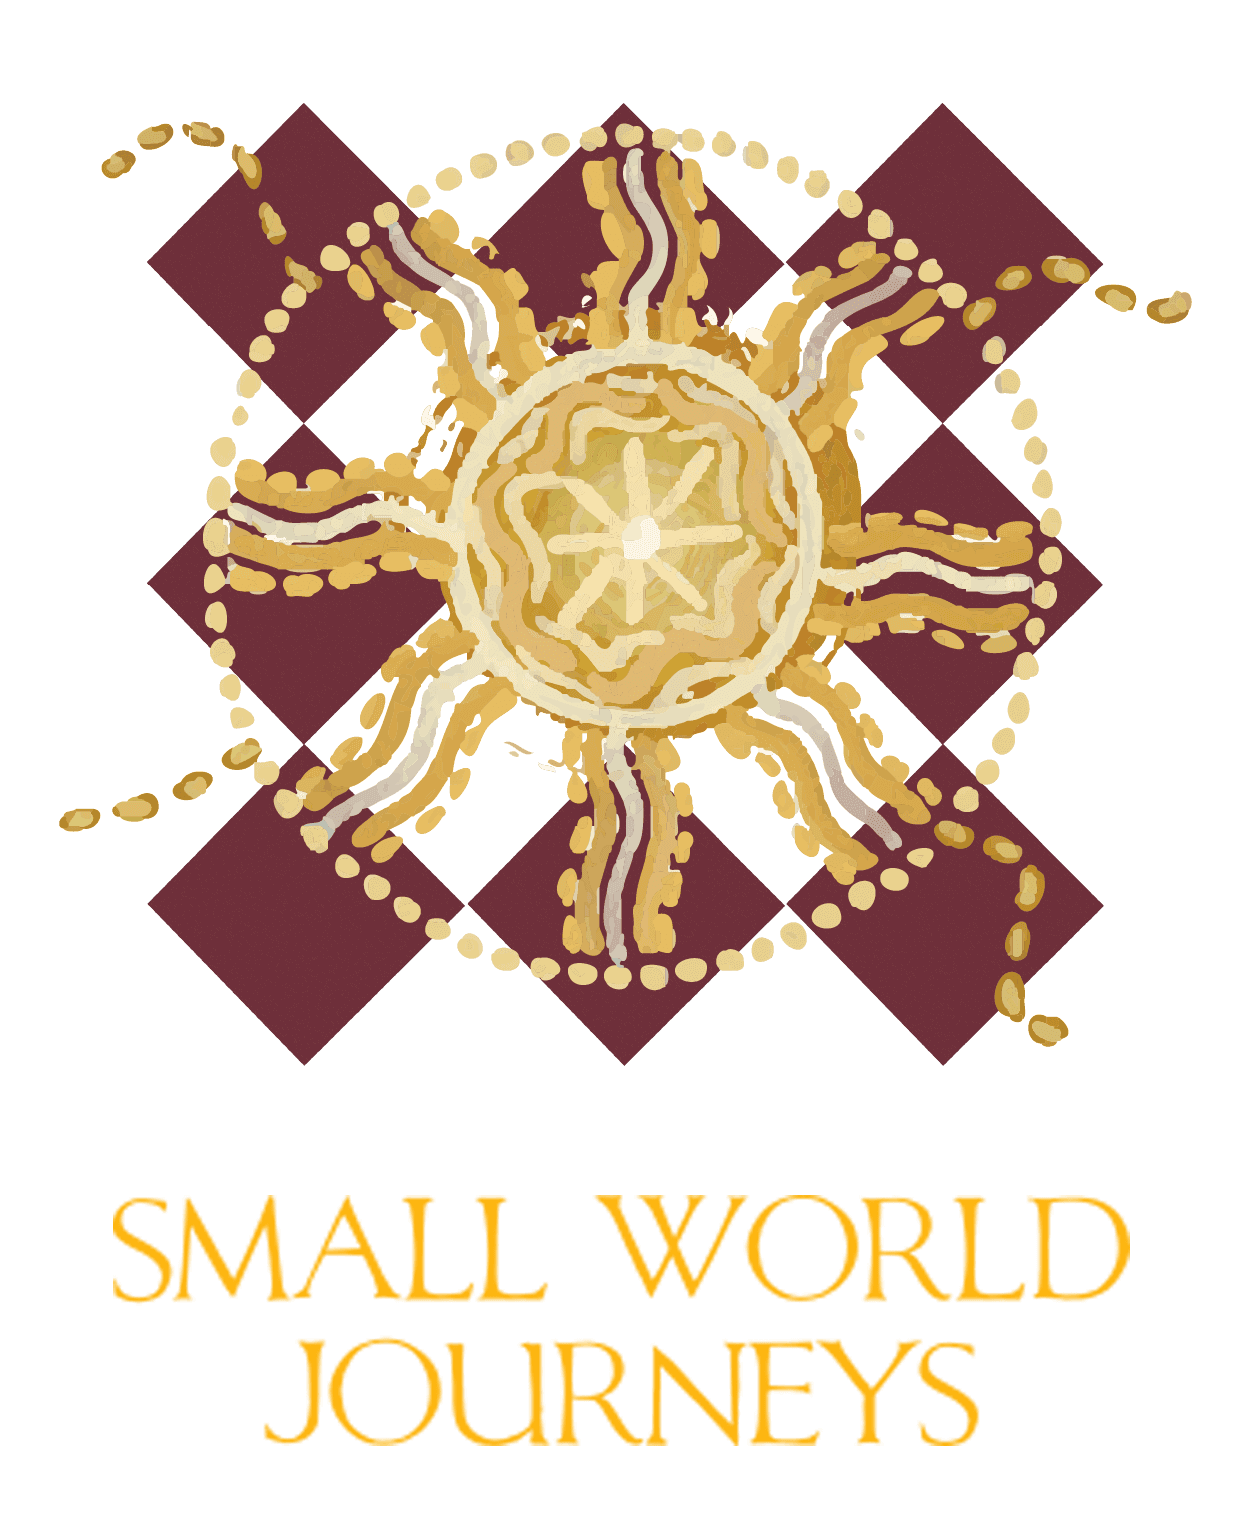 Small world journeys logo